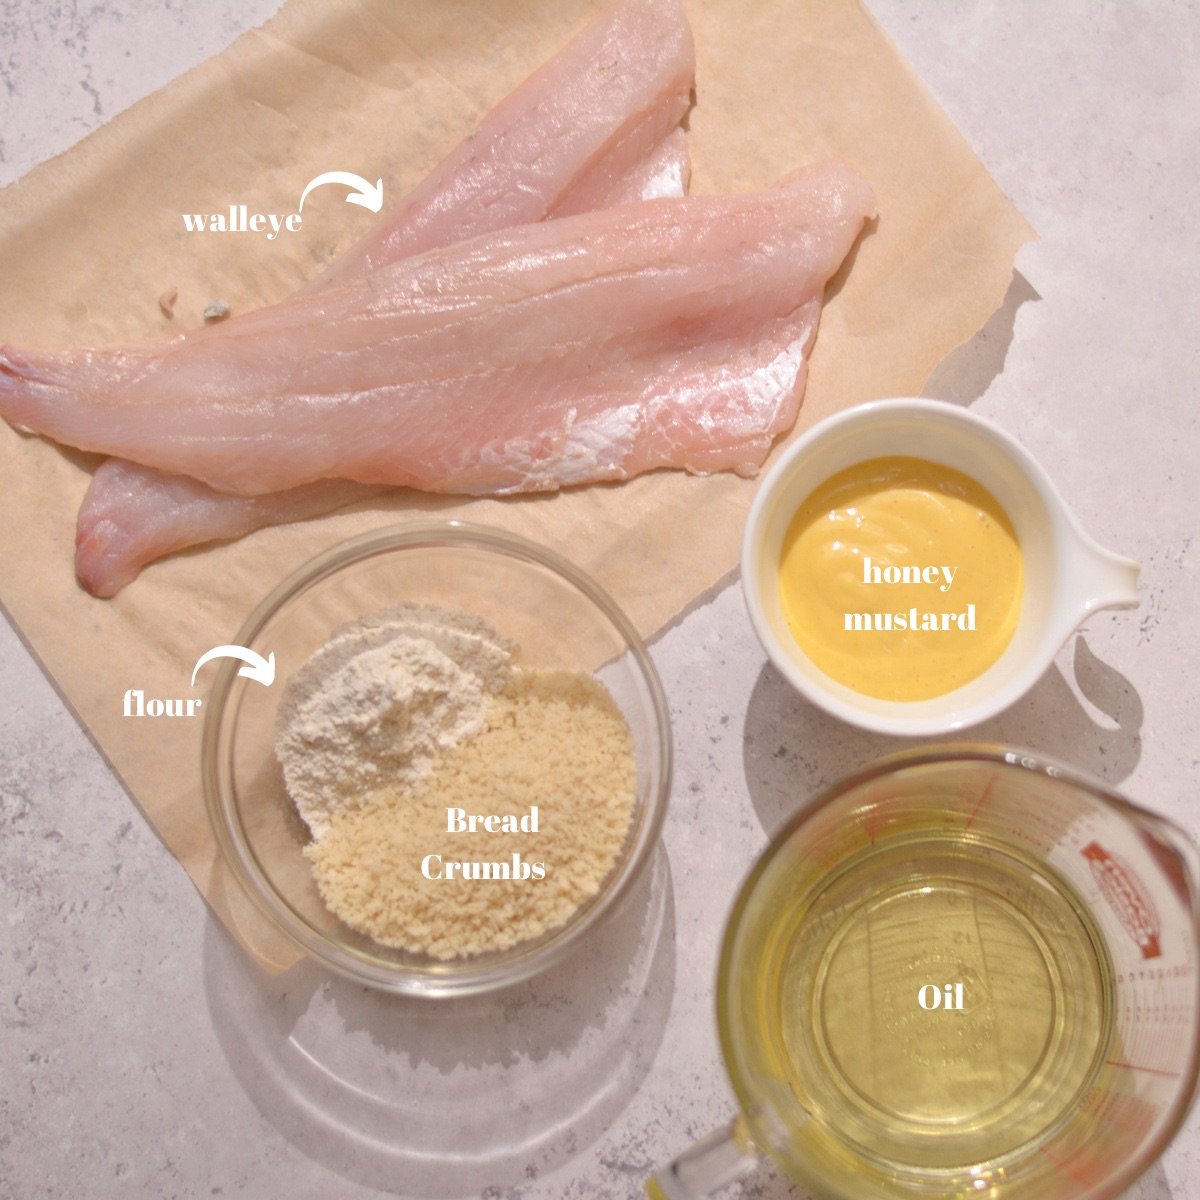 Ingredients for walleye including walleye, honey mustard, bread crumbs, flour, and oil.